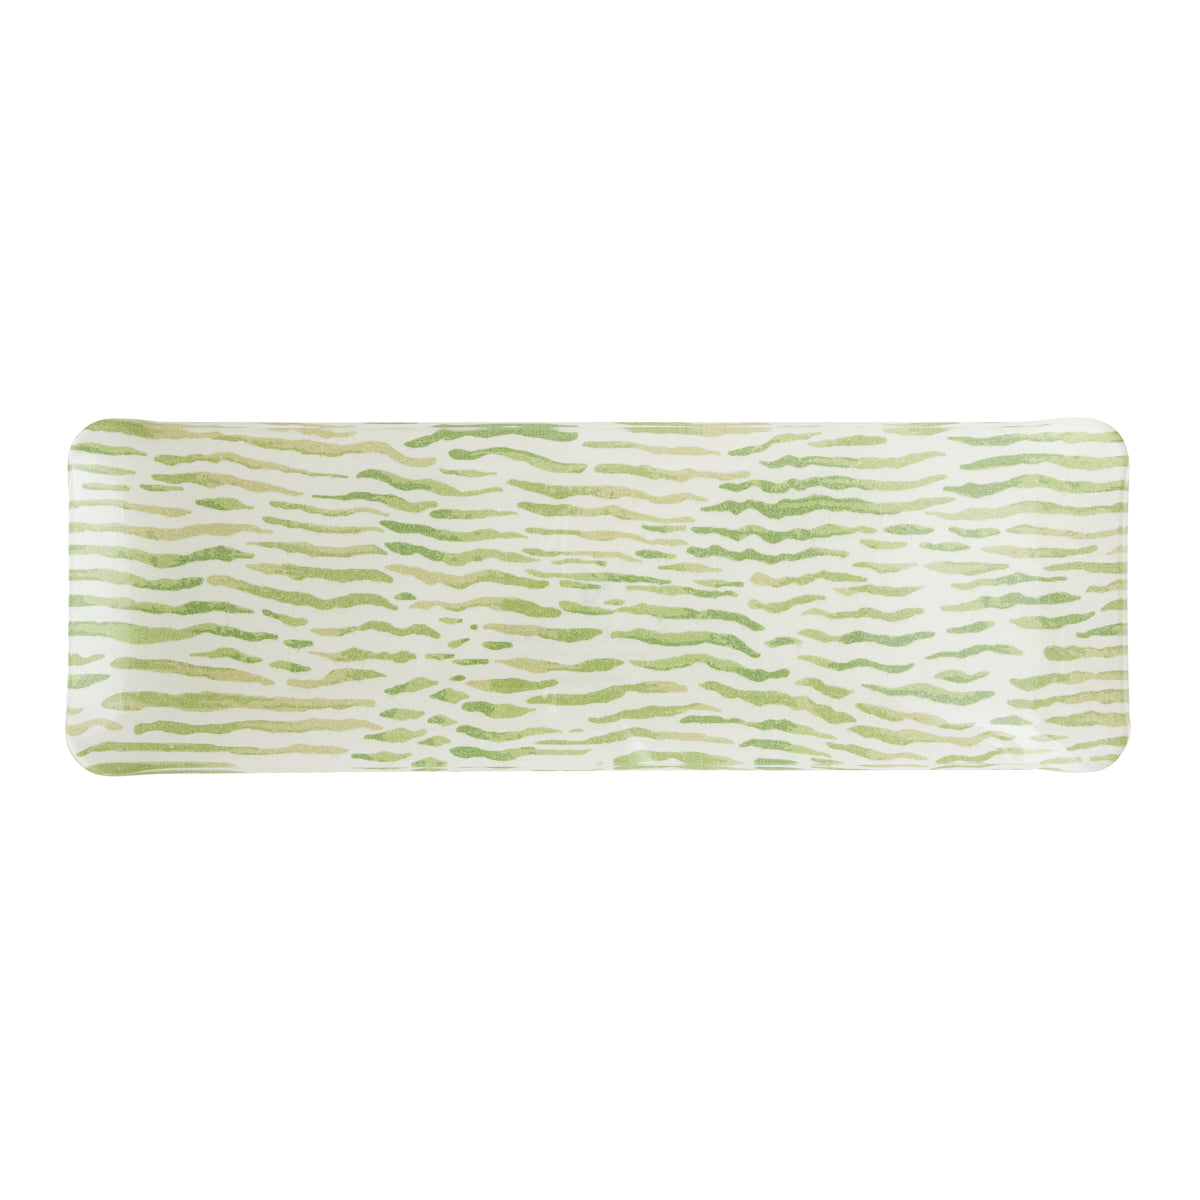 Nina Campbell Fabric Tray Oblong - Arles Green